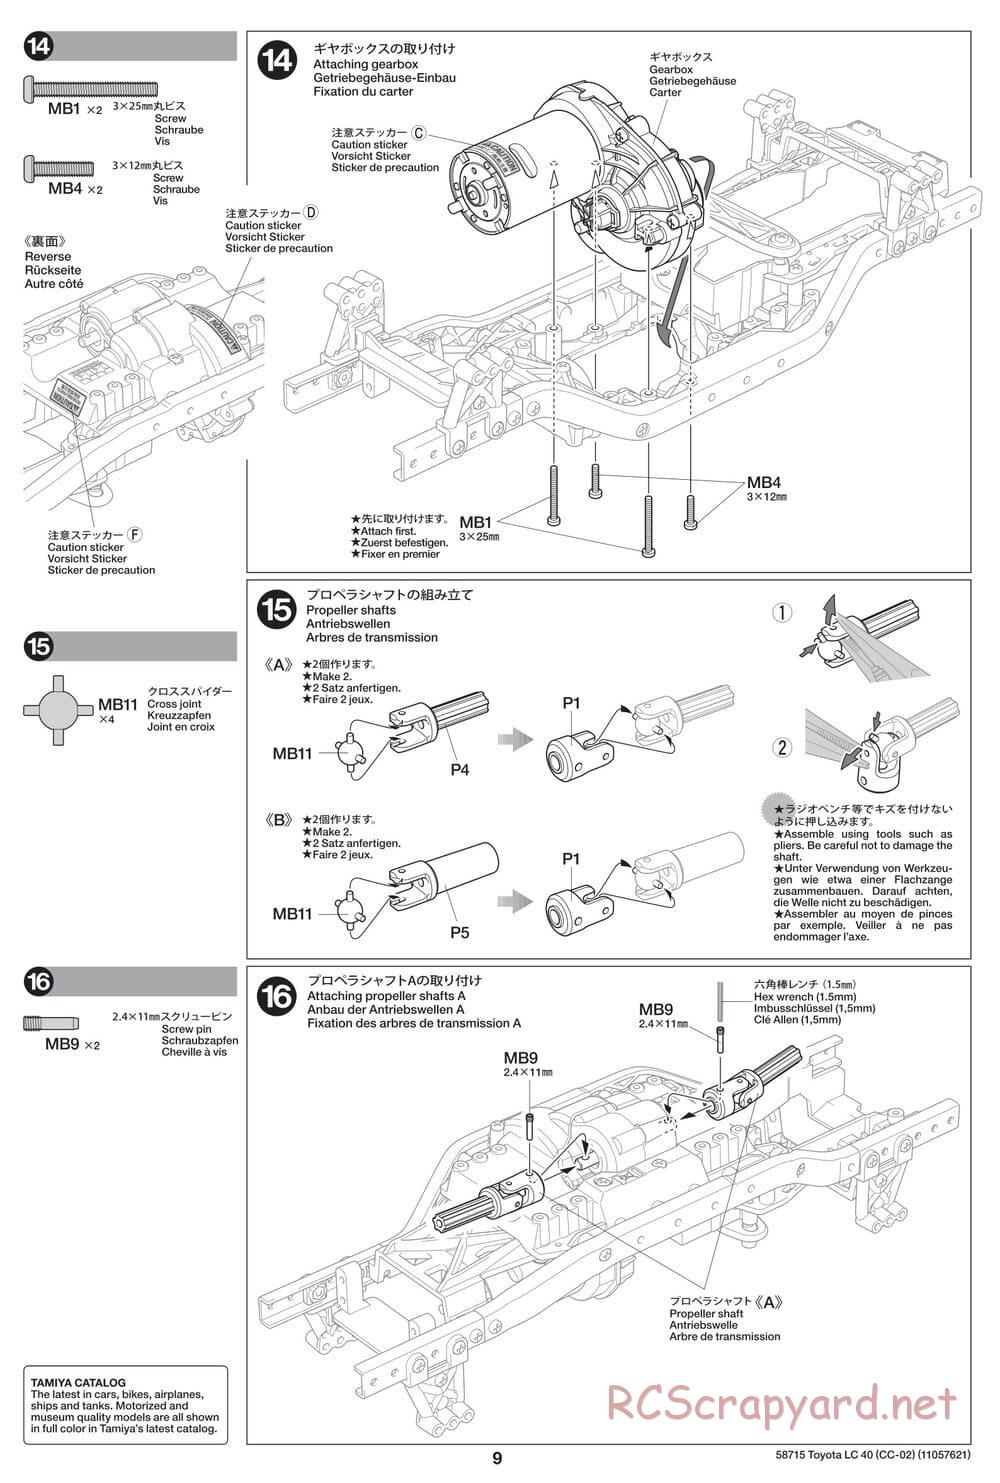 Tamiya - Toyota Land Cruiser 40 - CC-02 Chassis - Manual - Page 9